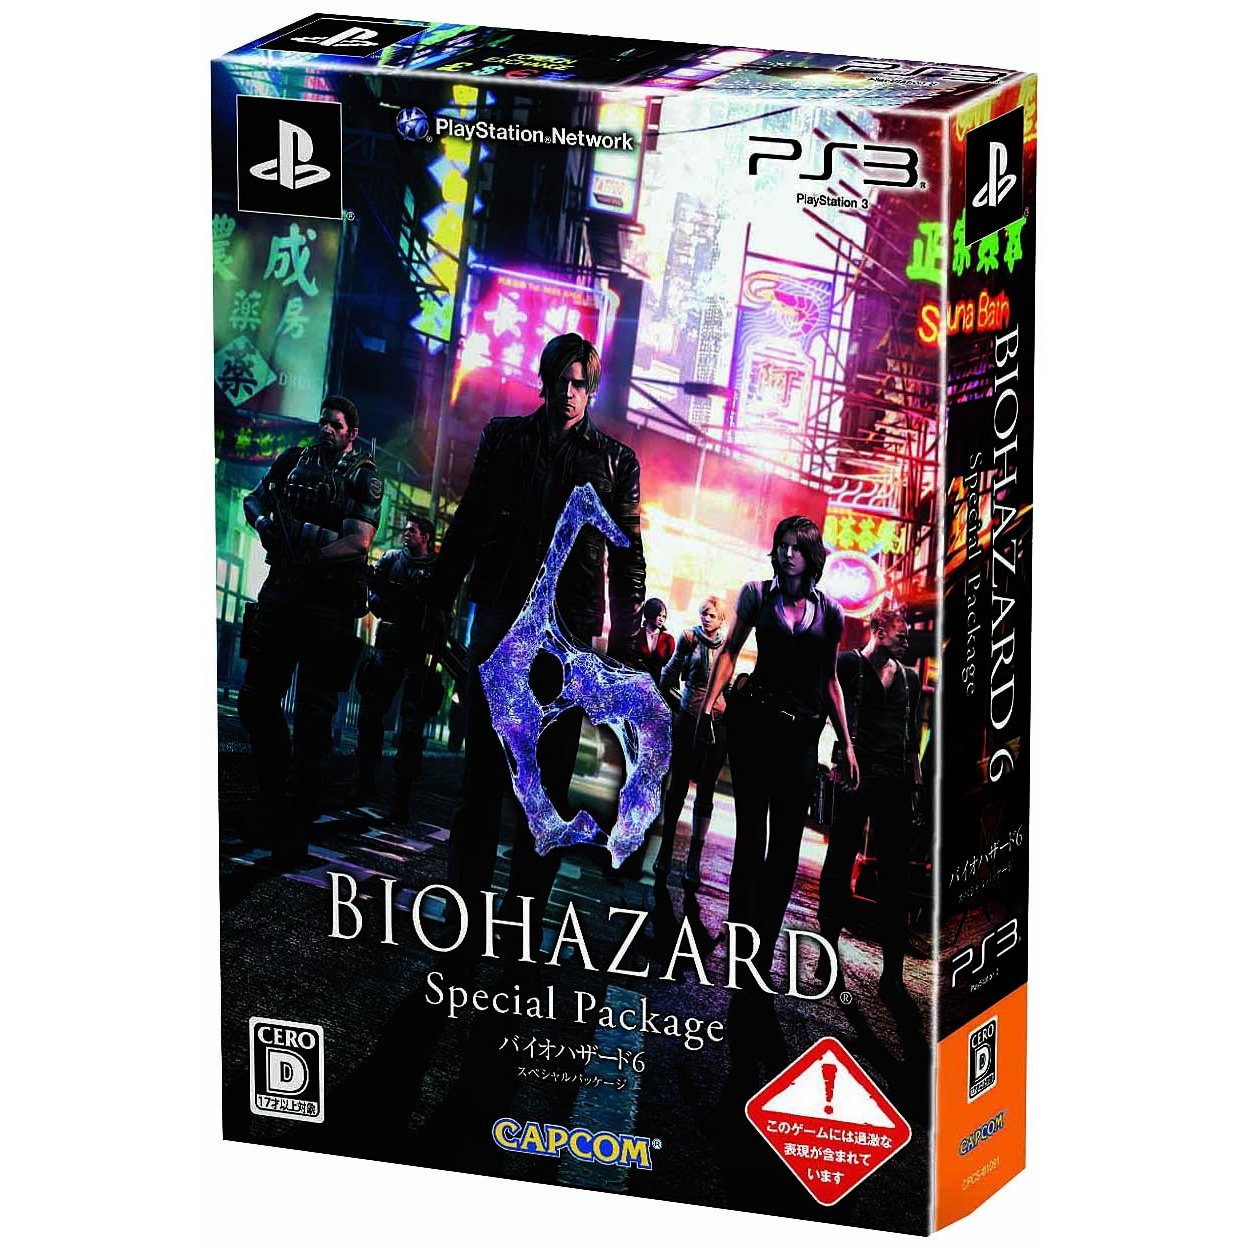 PS3 BIOHAZARD 6 Special Package - GSE - Game Source Entertainment  電玩遊戲產品發行商/ 代理商/ 經銷商/ 批發商